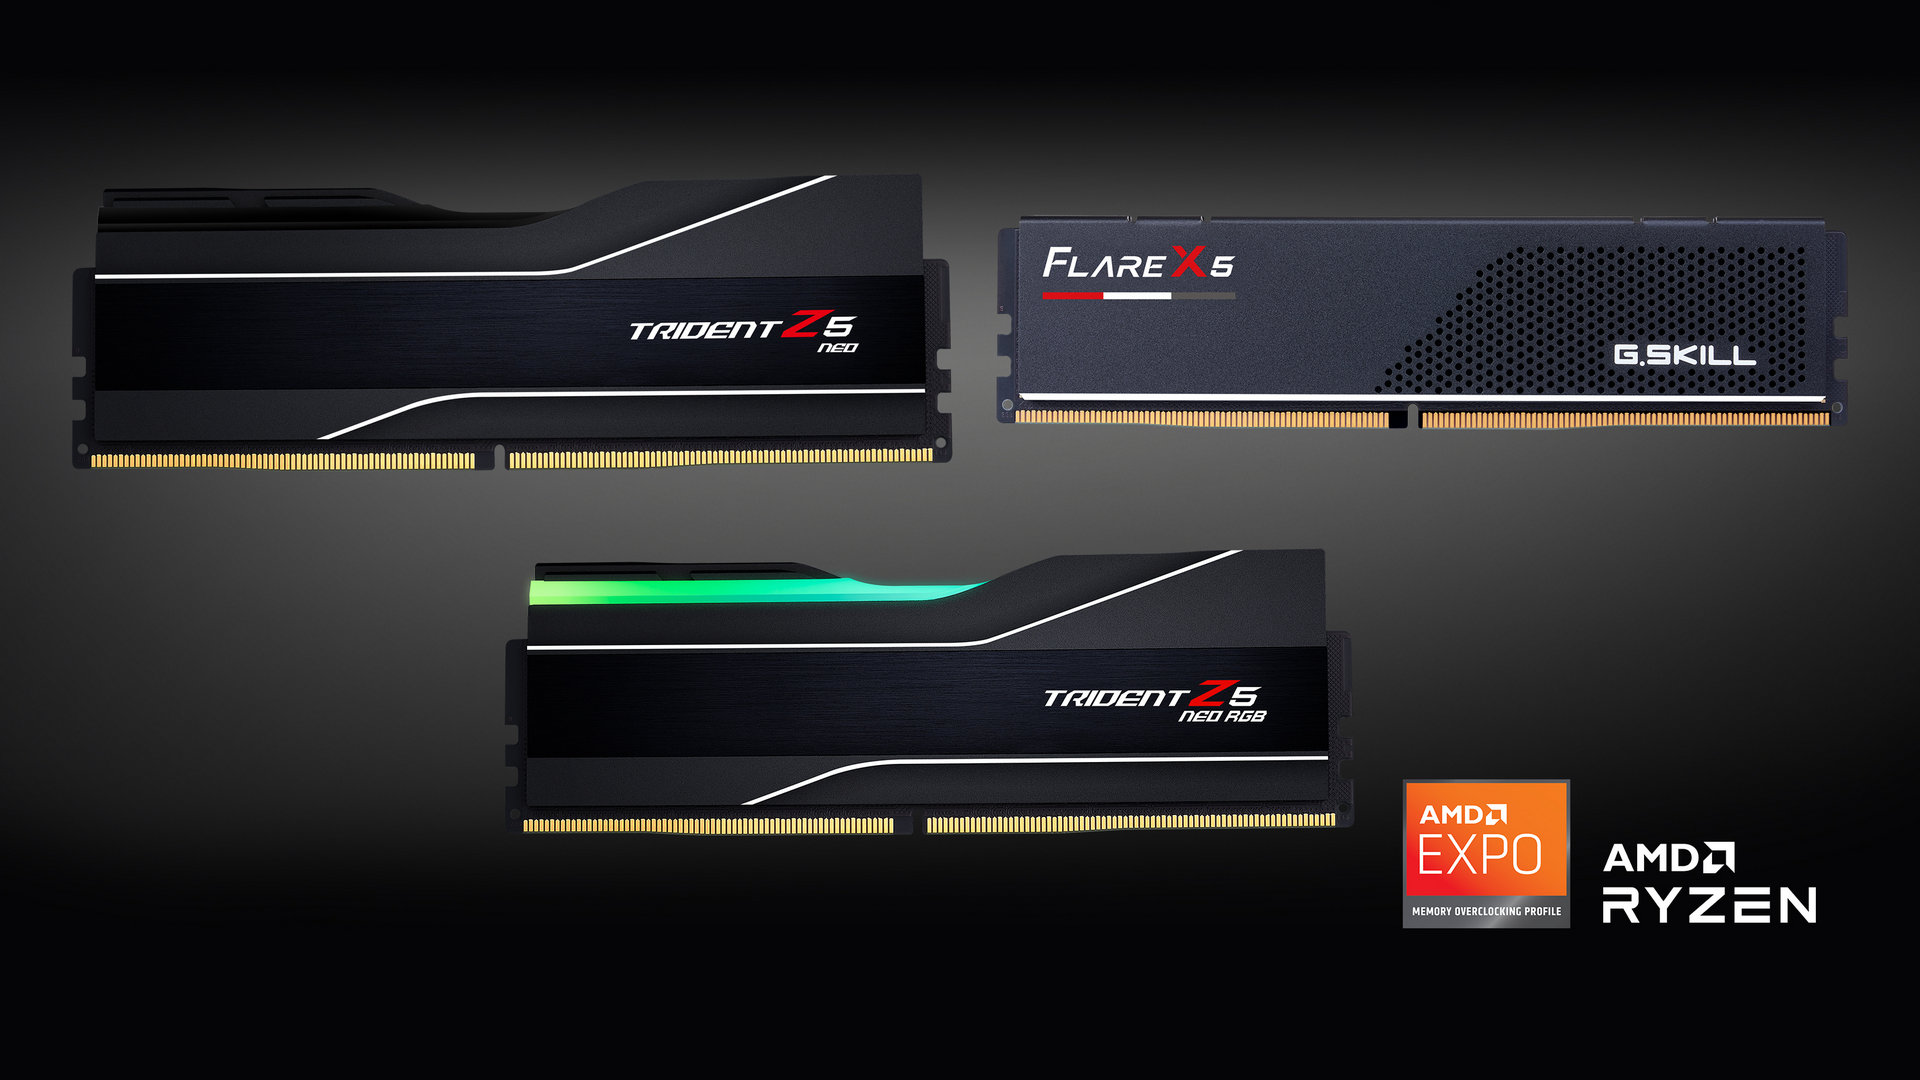 01 gskill ddr5 series memory ft amd expo G.SKILL เปิดตัวแรมรุ่นใหม่ Trident Z5 Neo และ Flare X5 Series DDR5 รองรับการทำงานซีพียู AMD Ryzen 7000 Series อย่างเต็มรูปแบบ 